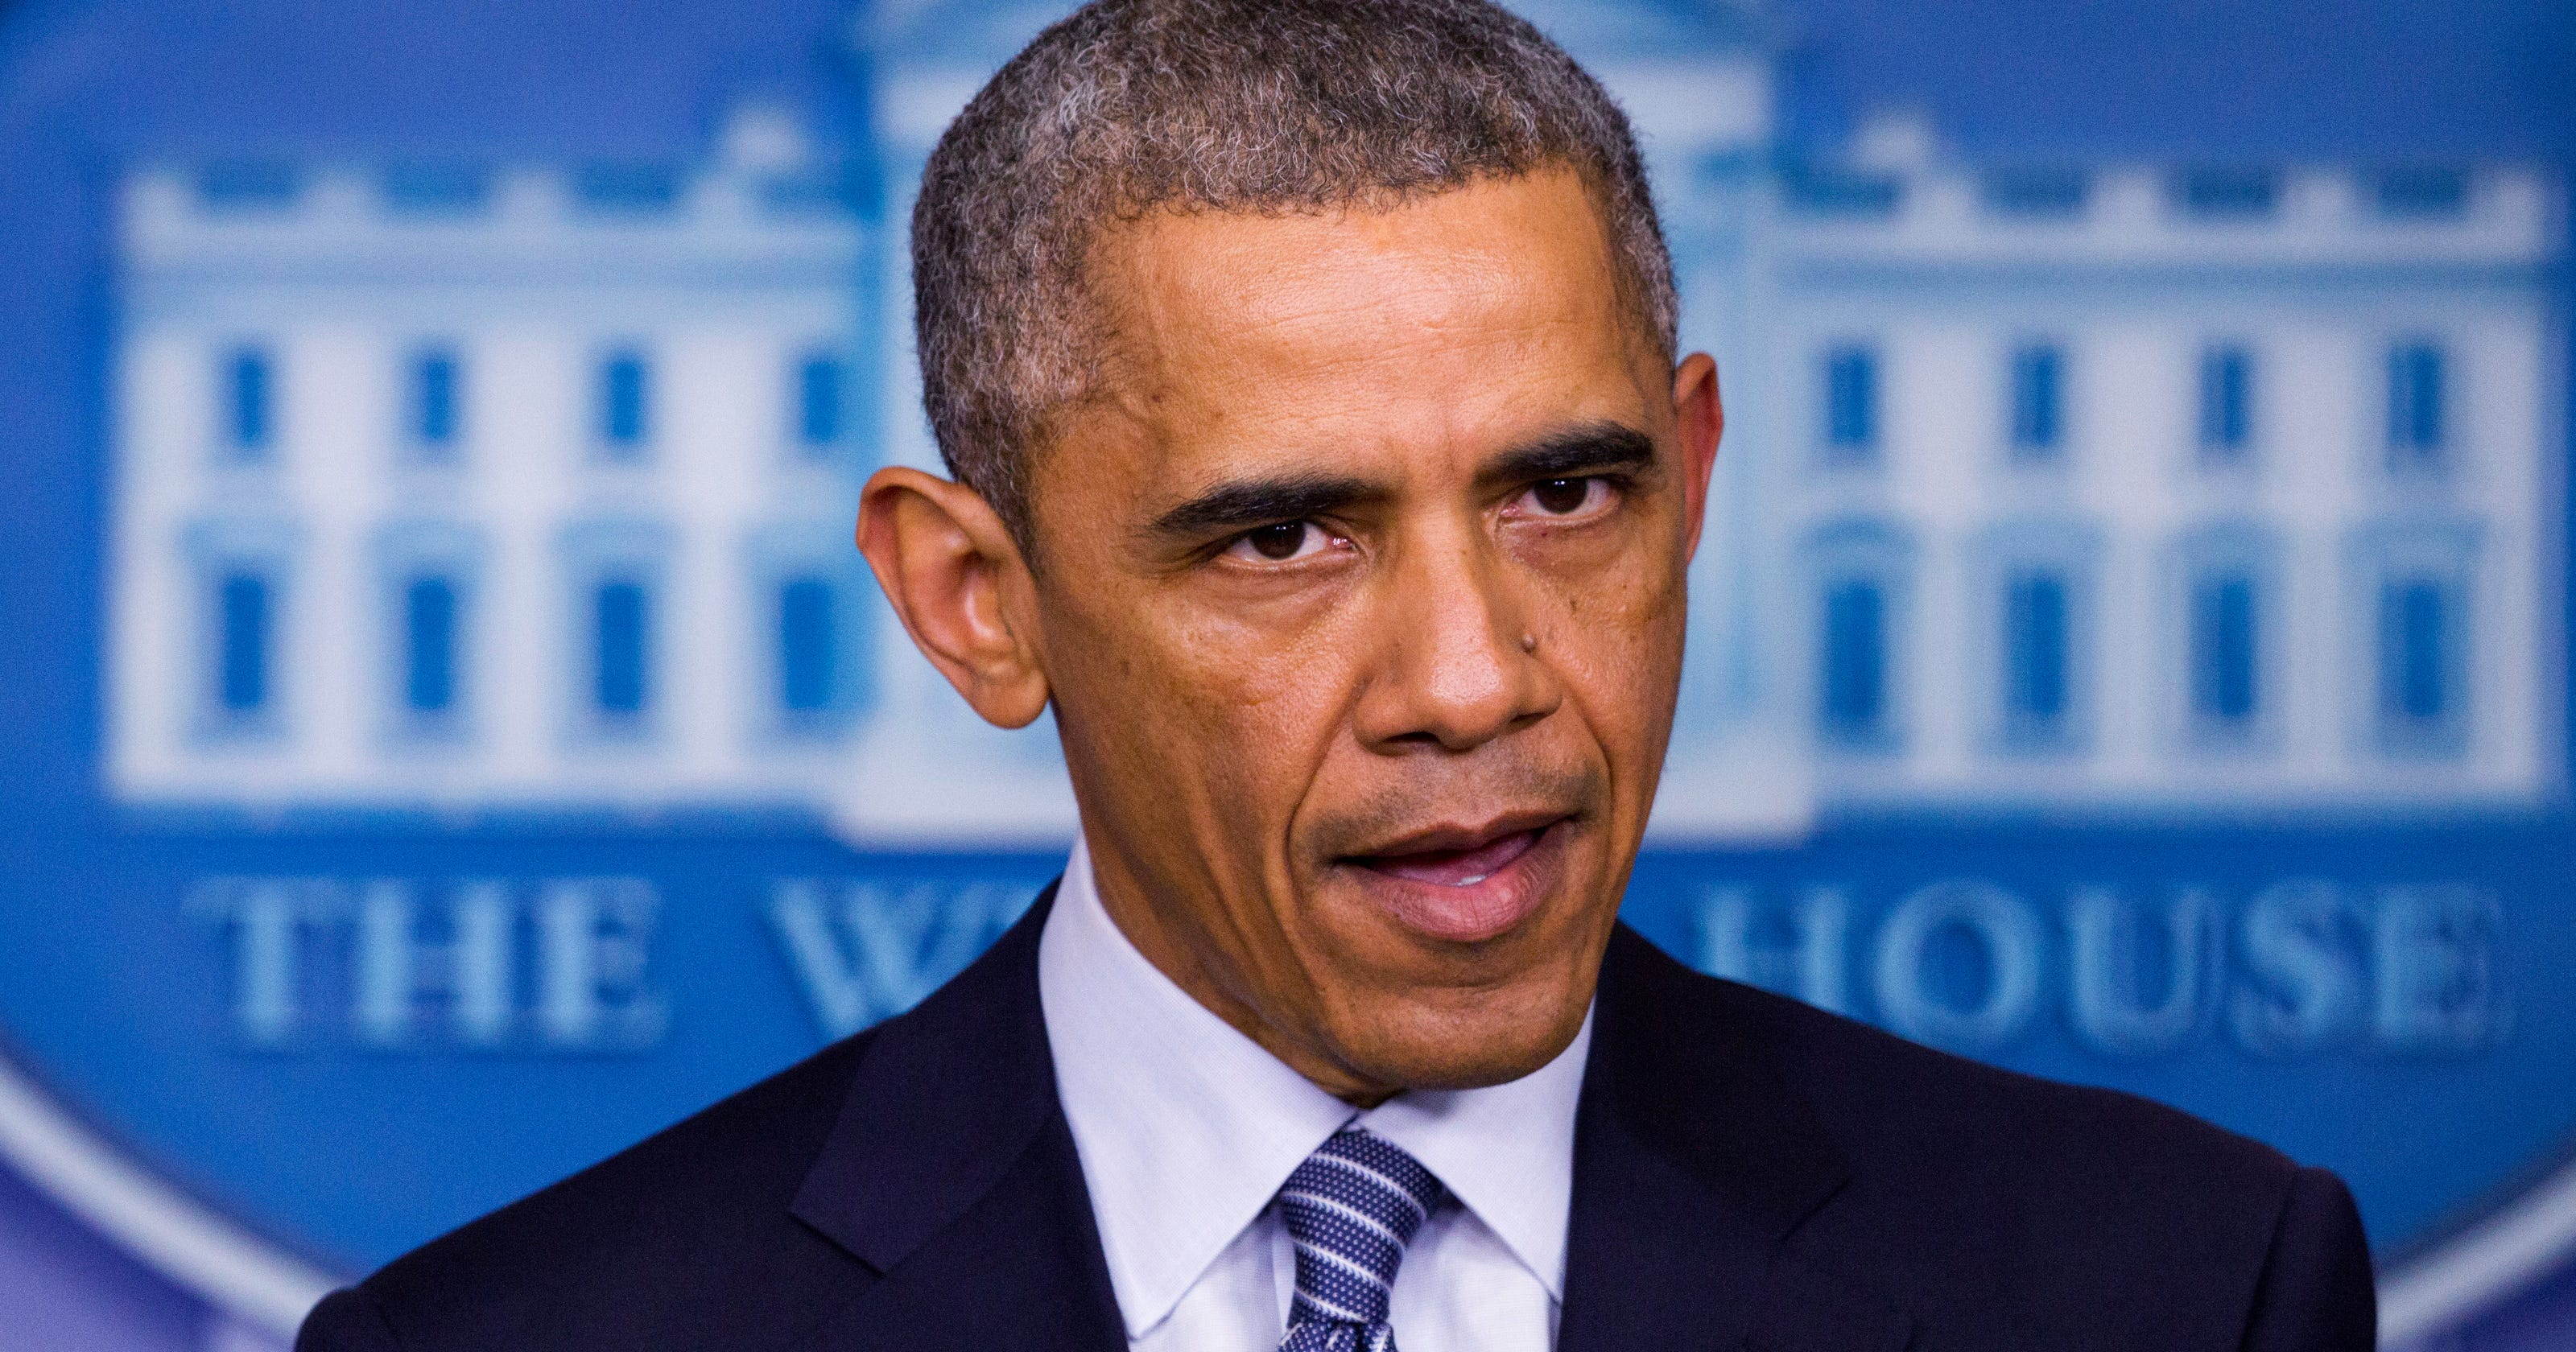 Obama Embarrassed For Gop Over Iran Letter